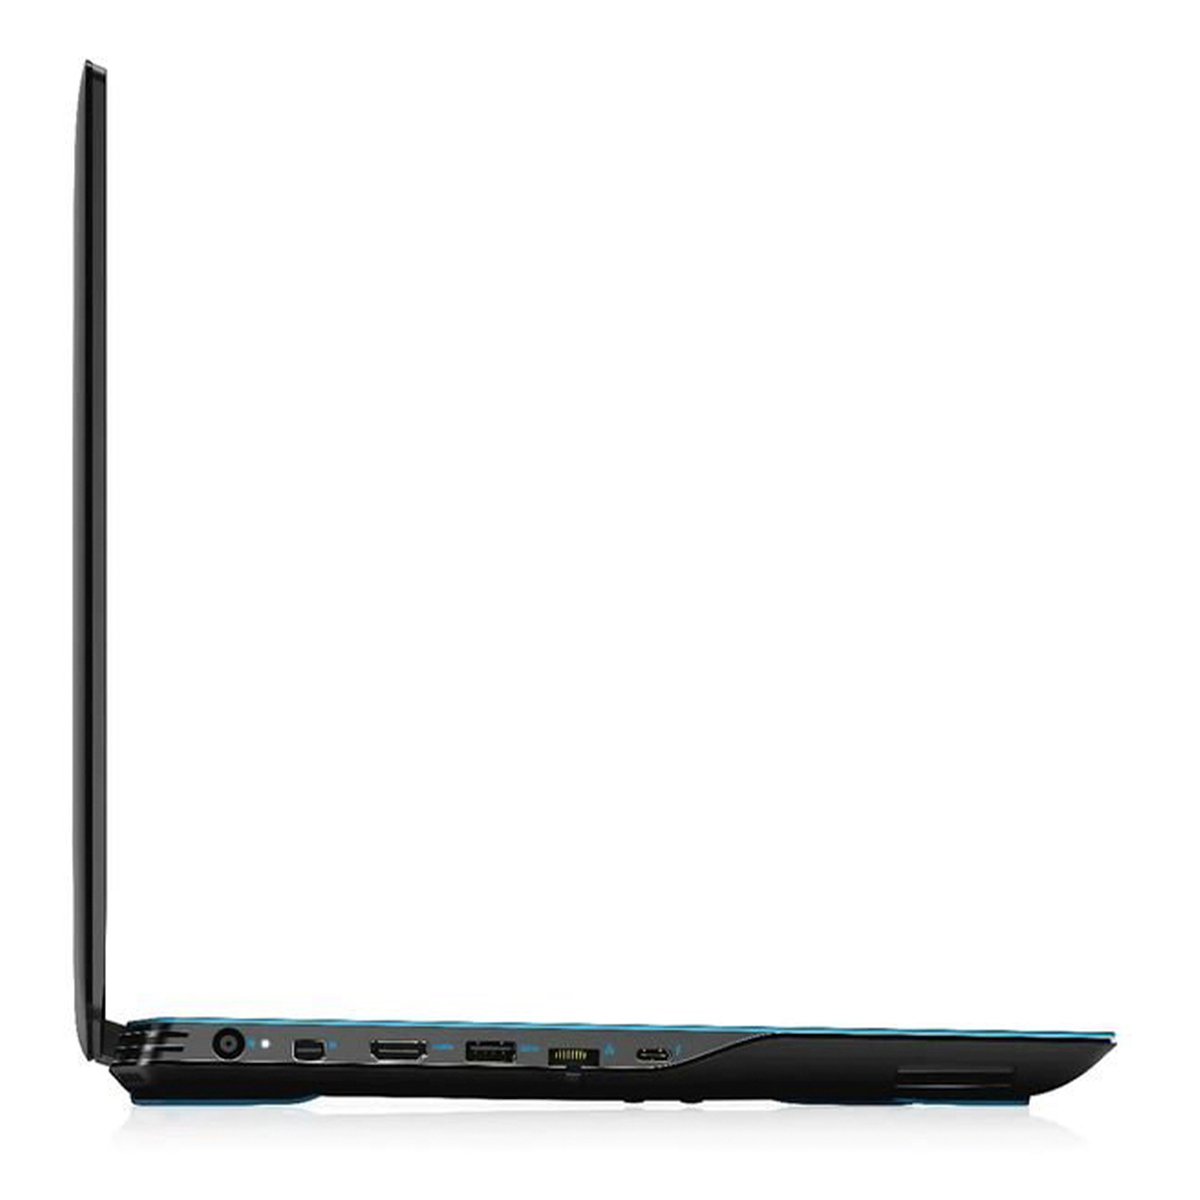 Dell 3500-G3-8300-BLK Gaming Laptop,Intel® Core i7-10750H Processor ,16GB RAM,1TB HDD ,256GB SSD,NVIDIA(R) GeForce(R) GTX 1650 4GB GDDR6,Windows10,15.6inch,Black